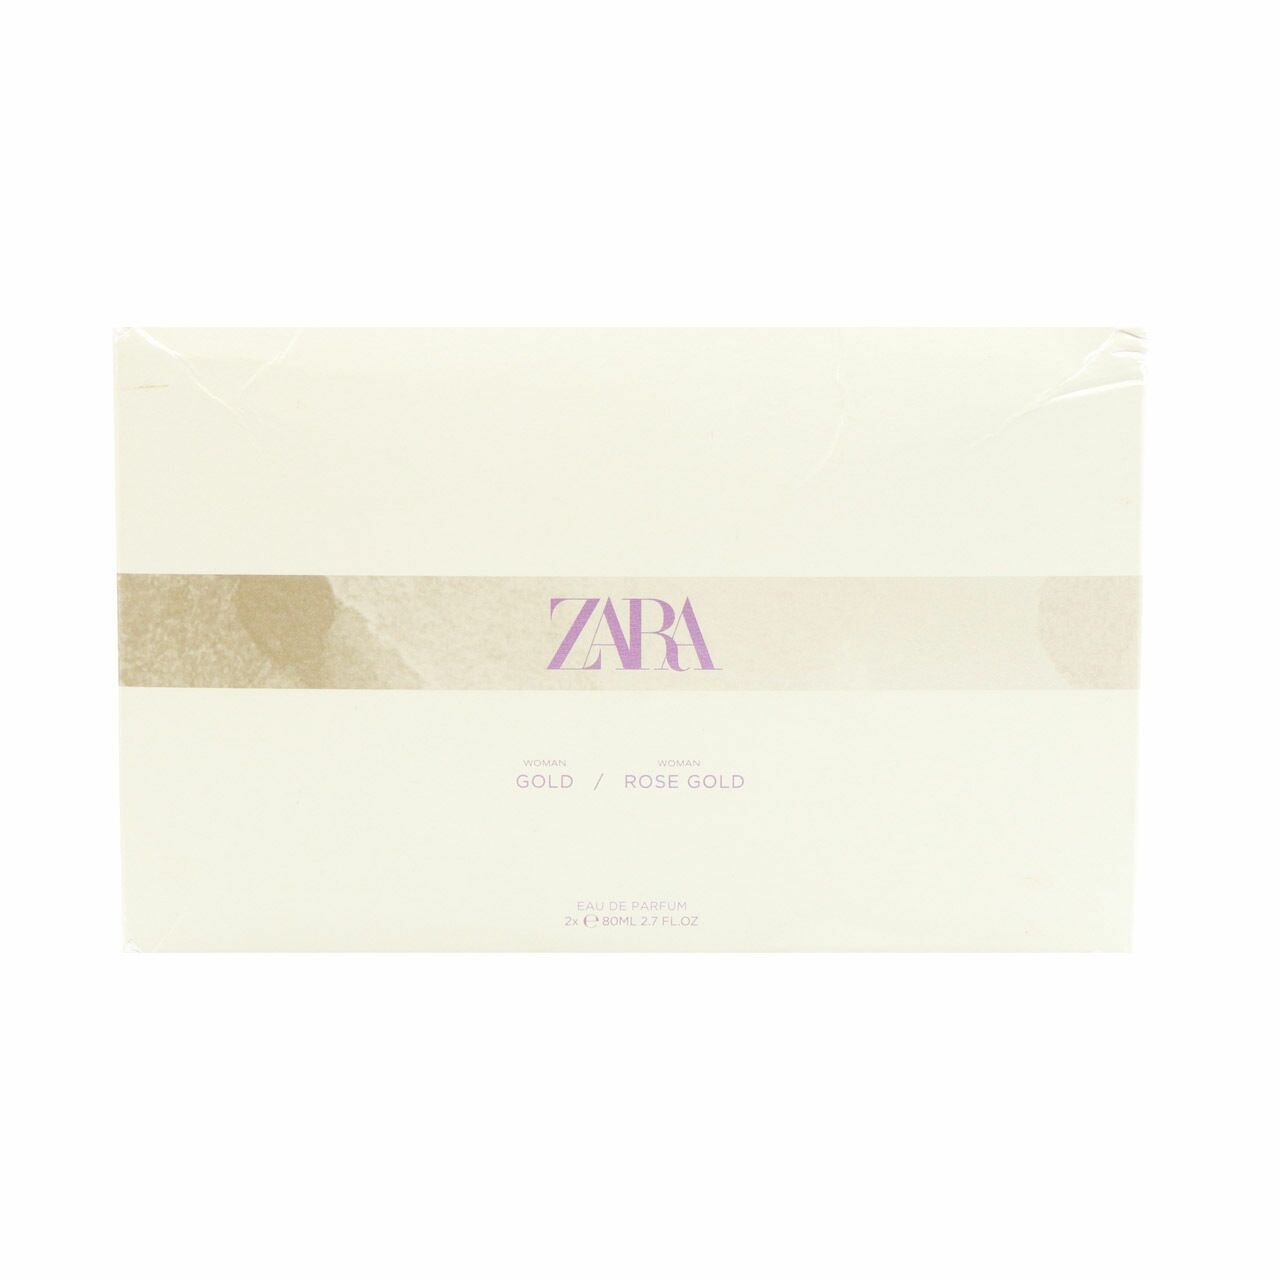 Zara Gold / Rose Gold Eau De Parfum